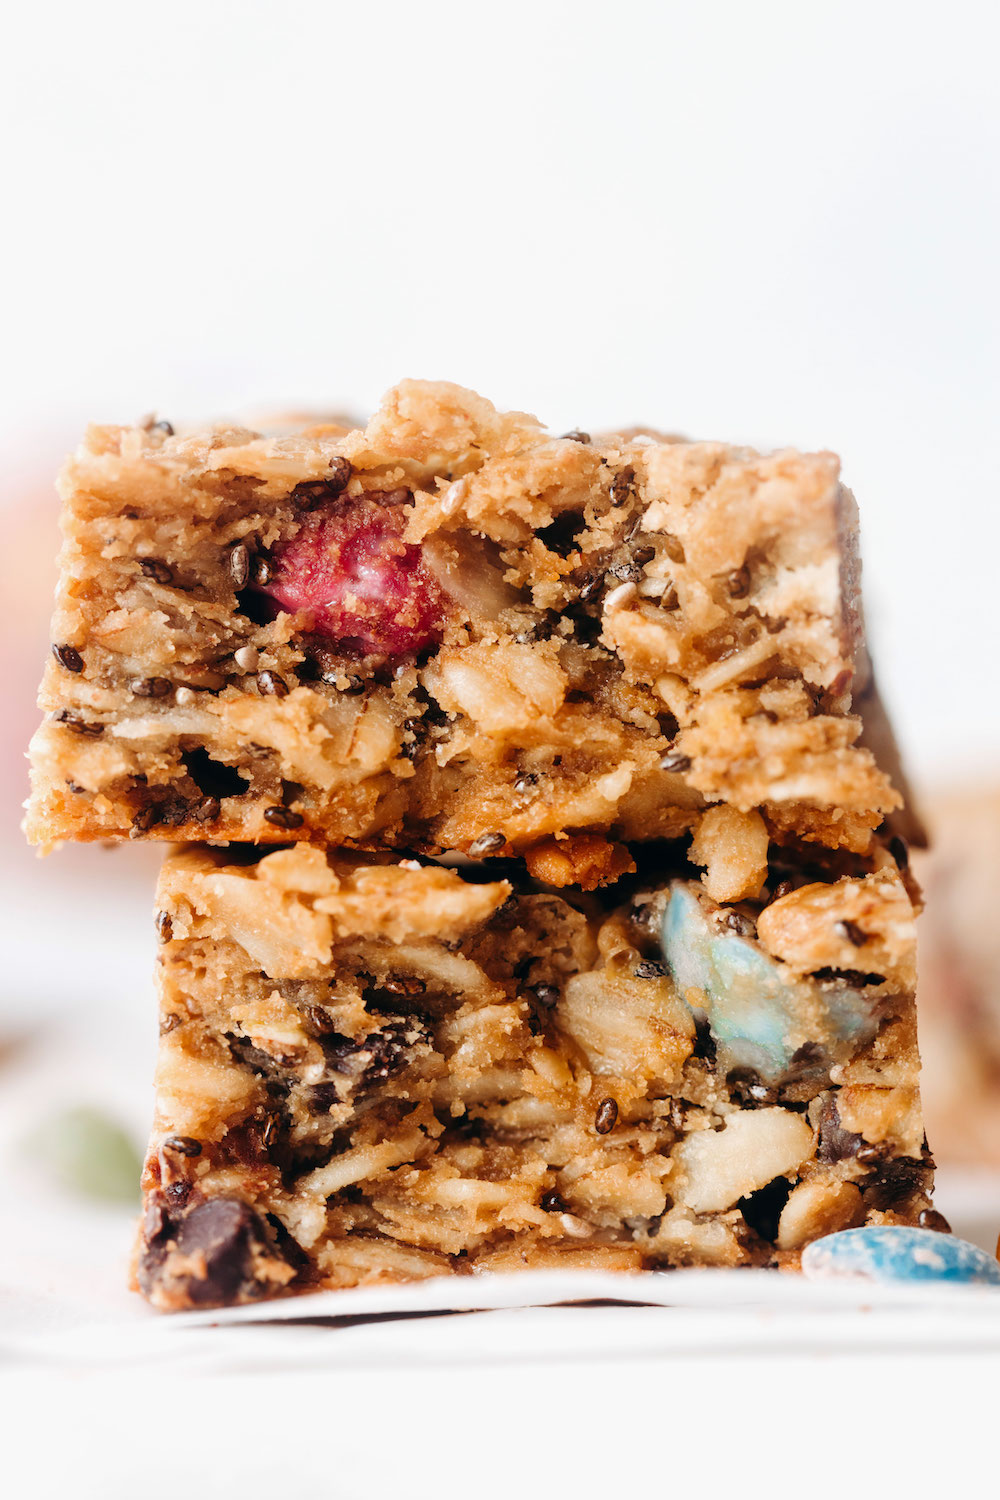 Monster Cookie Granola Bars (gluten-free, high-protein, nut-free option!)